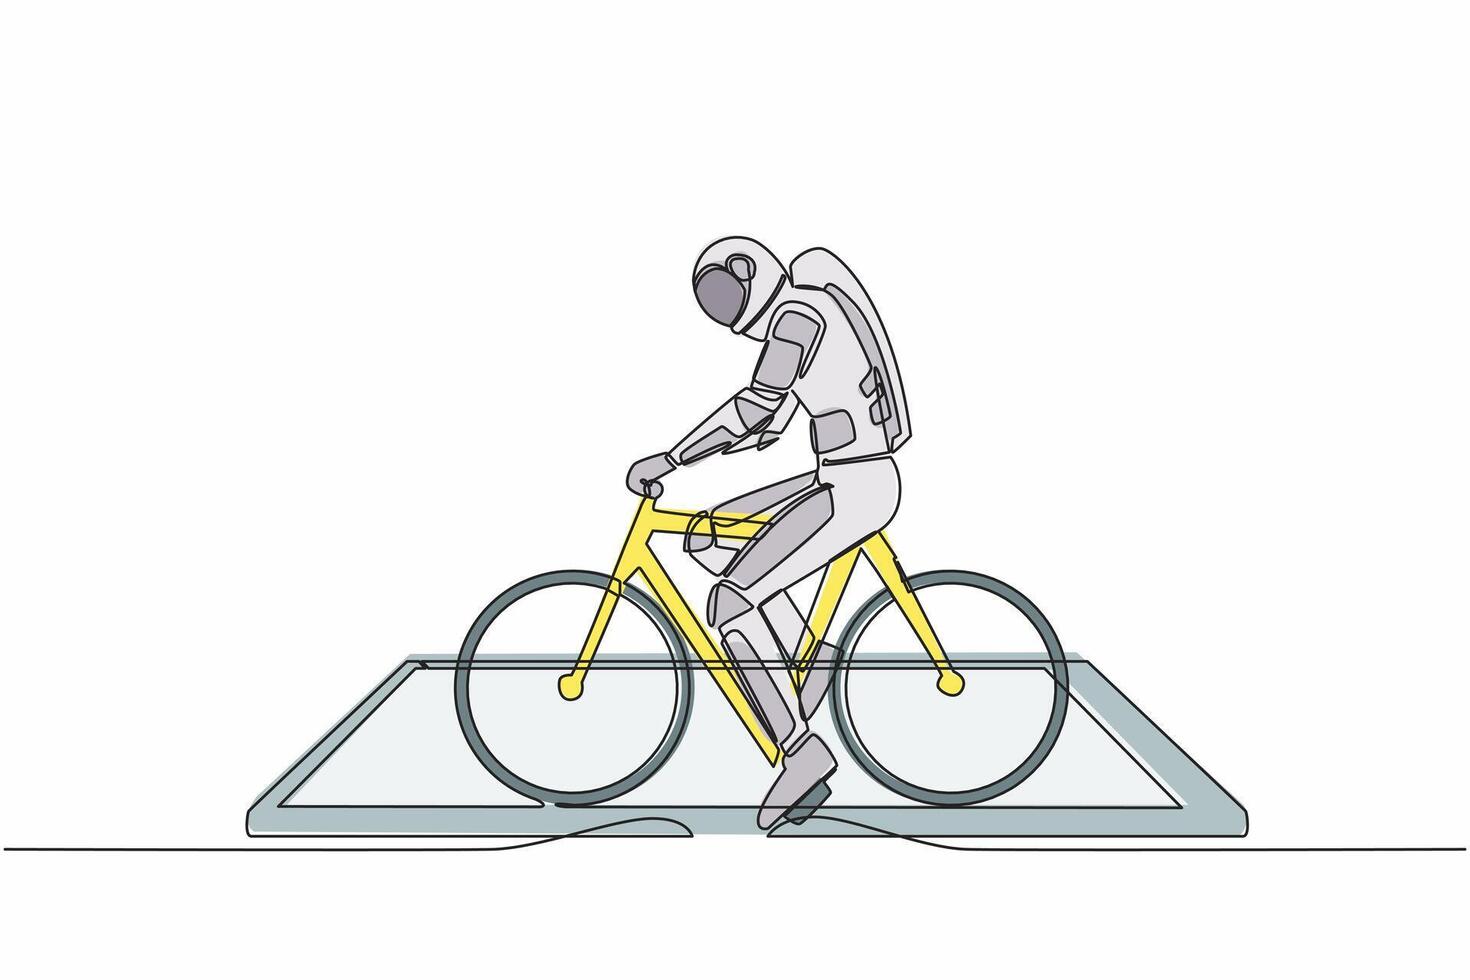 soltero continuo línea dibujo joven astronauta vistiendo casco, montando bicicleta en teléfono inteligente pantalla. virtual bicicleta para cardio capacitación. cosmonauta profundo espacio. uno línea dibujar diseño vector ilustración